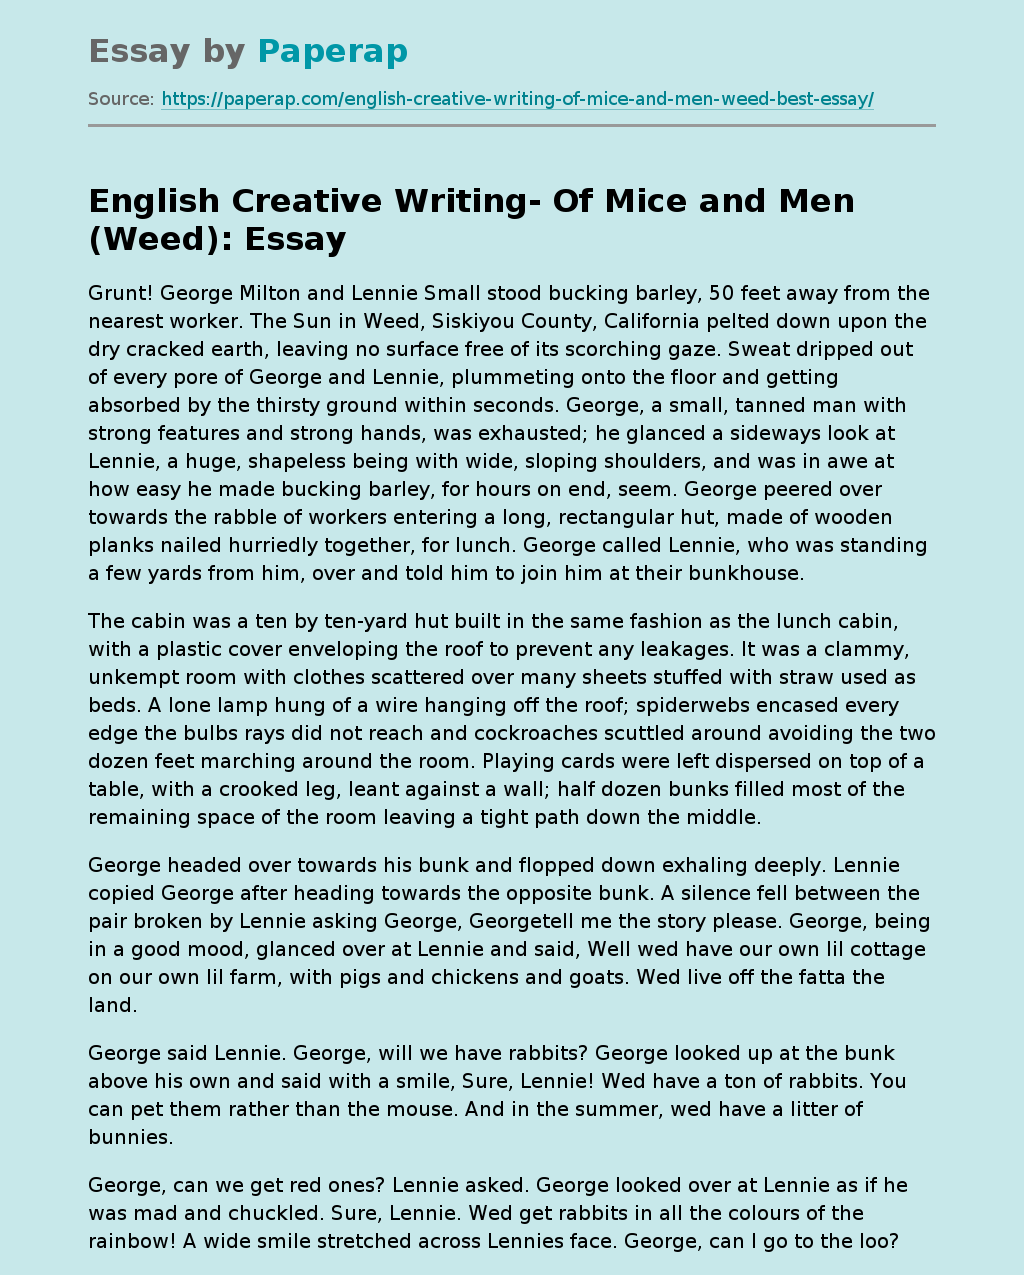 English Creative Writing- Of Mice and Men (Weed):